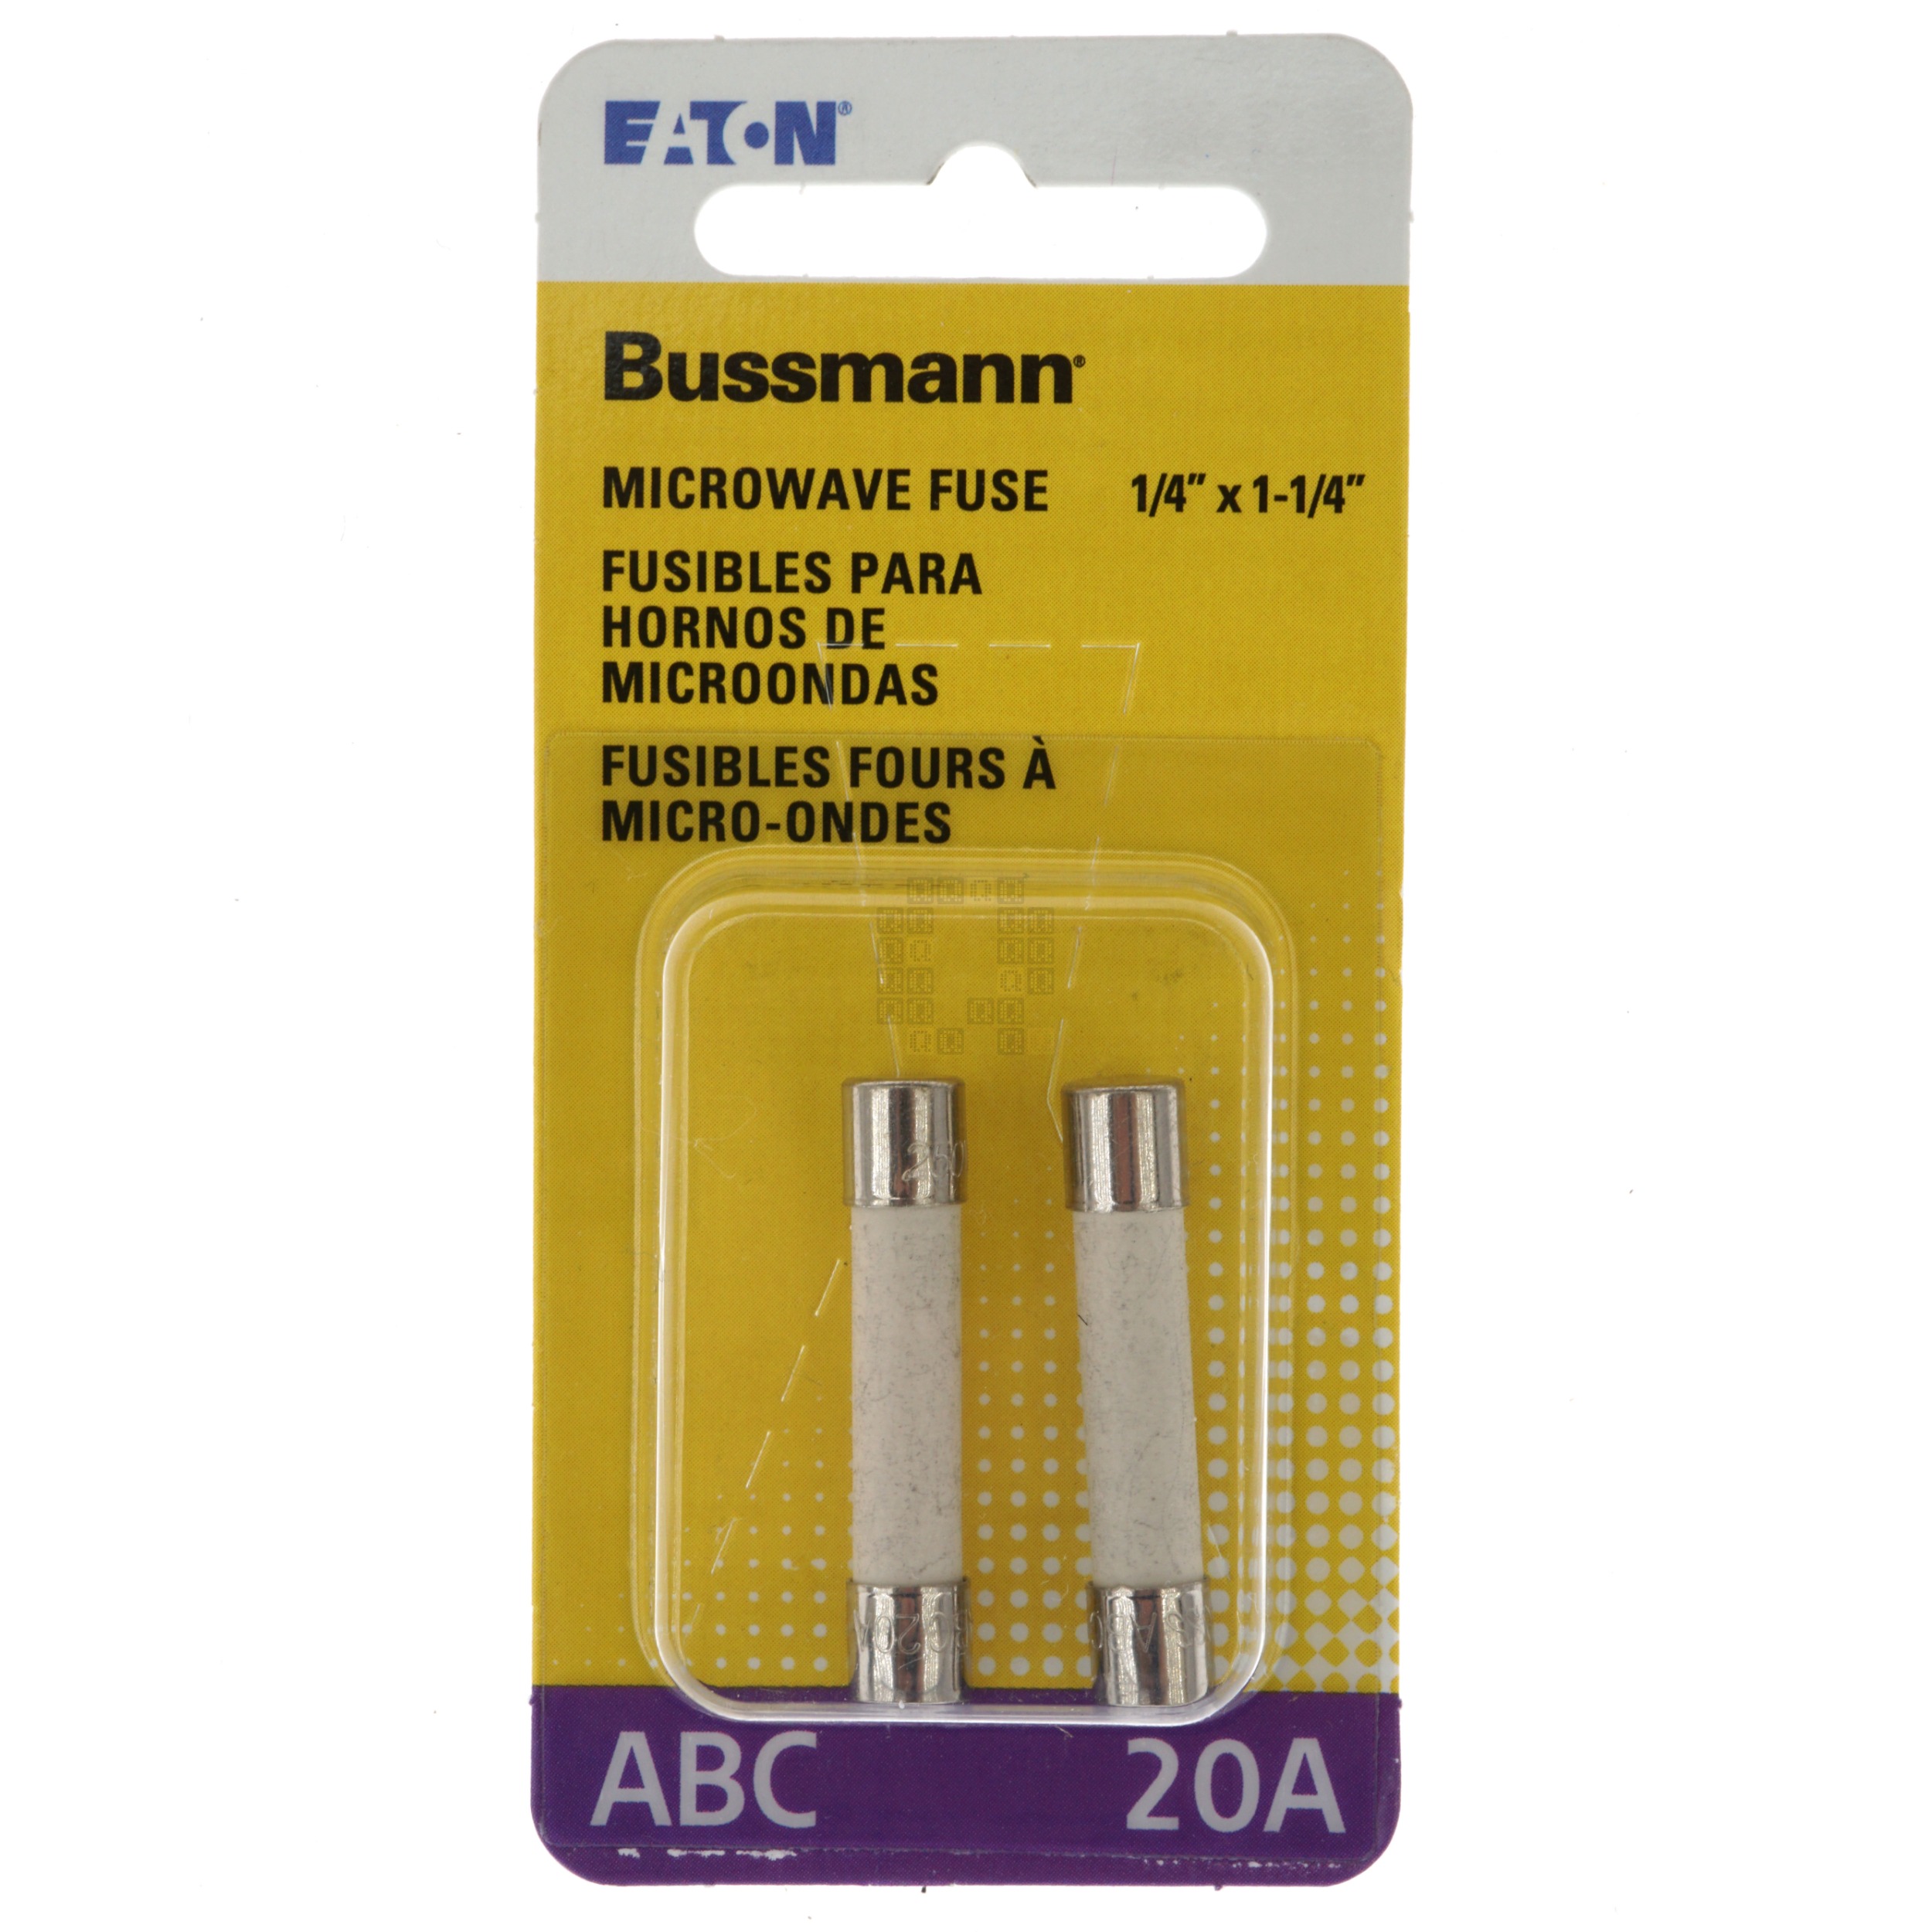 Eaton Bussman BP/ABC-20 Microwave Fast Acting Ceramic Tube Fuse 2-Pack, 20 Amp, 250VAC